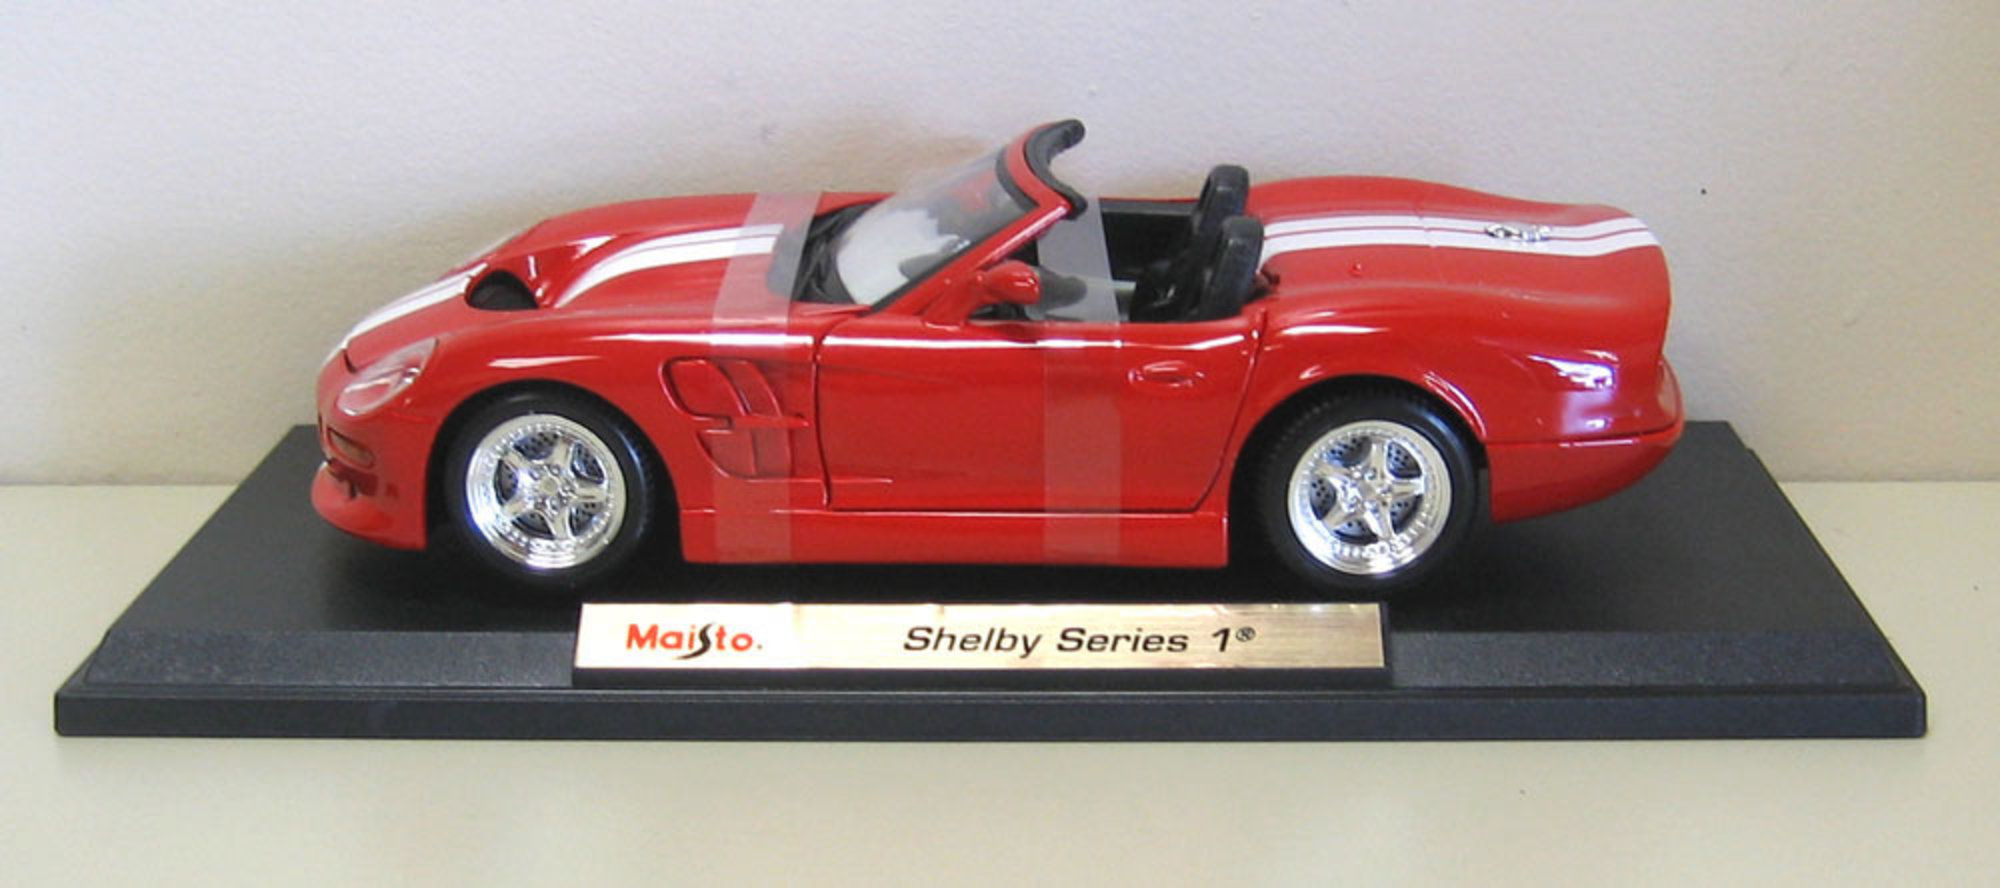 1999 Shelby Series 1 Diecast Model Car Red Maisto 1 18 Scale | eBay